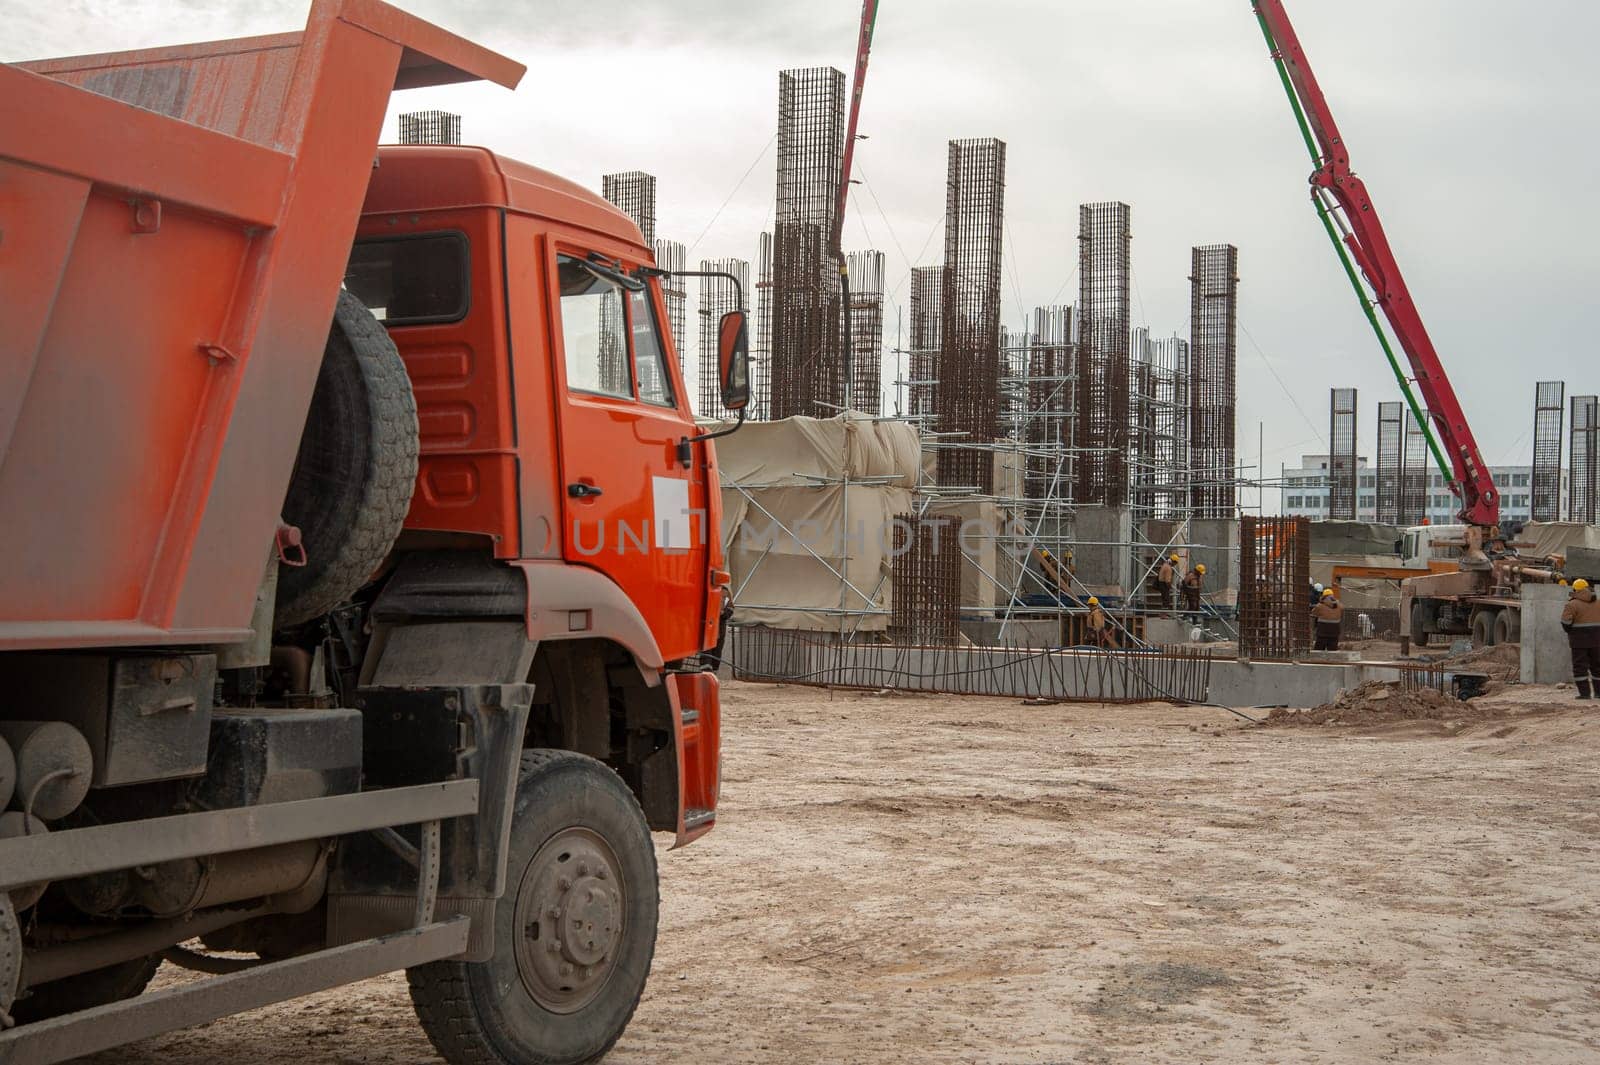 An orange dumper truck in an construction area